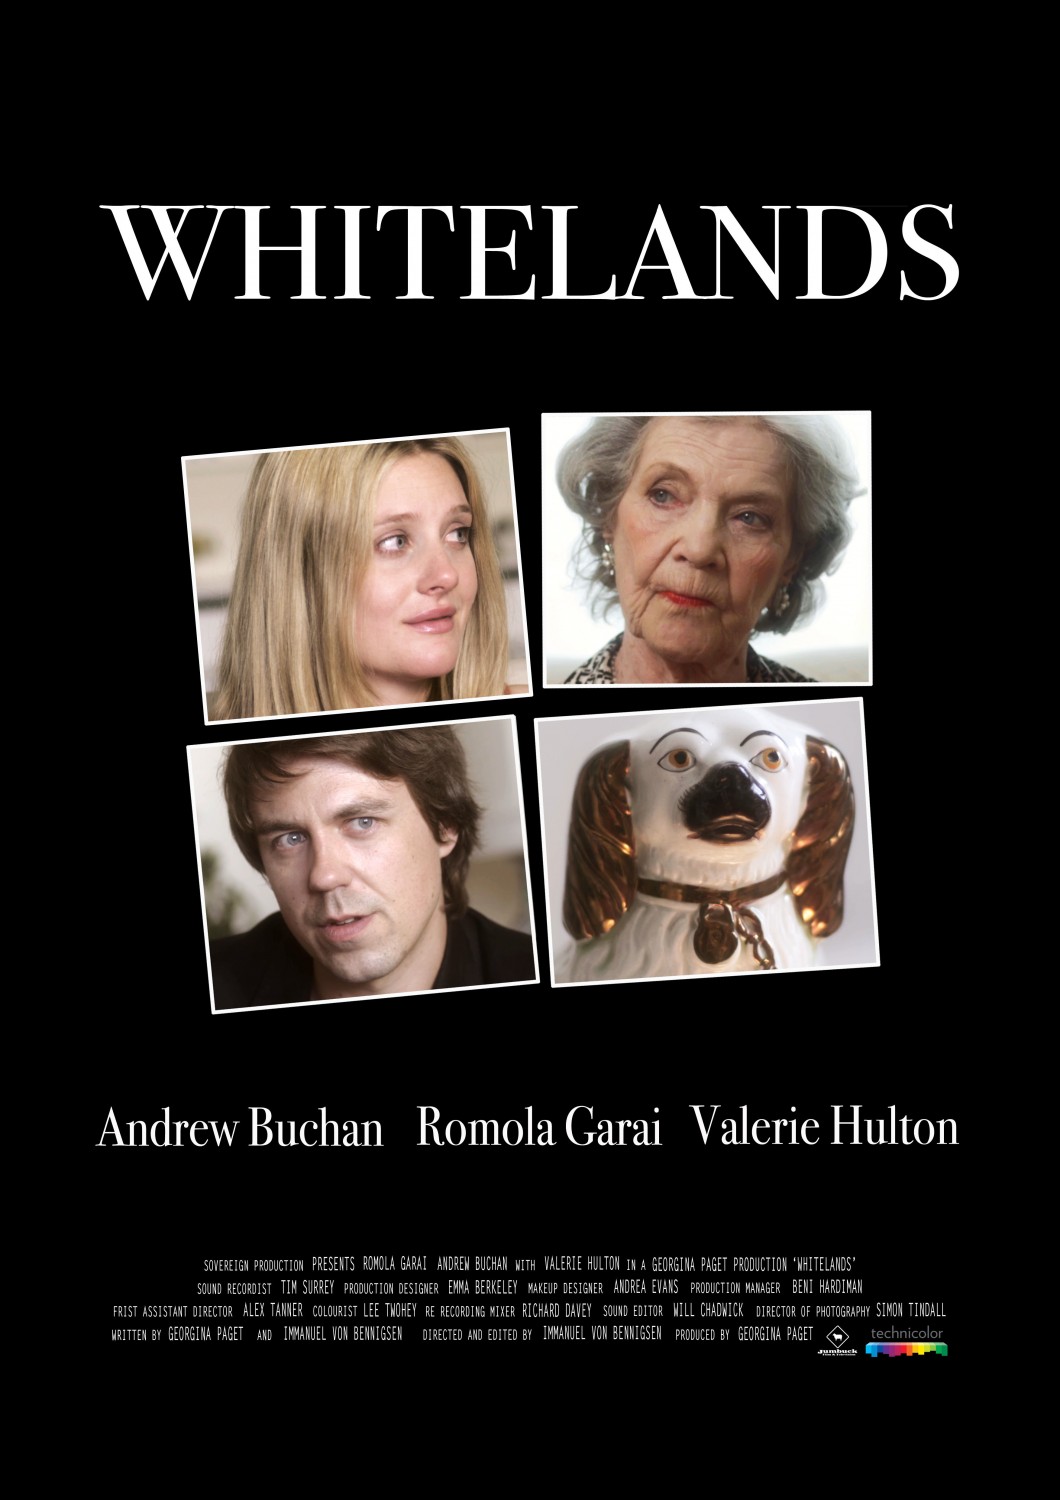 Extra Large Movie Poster Image for Whitelands